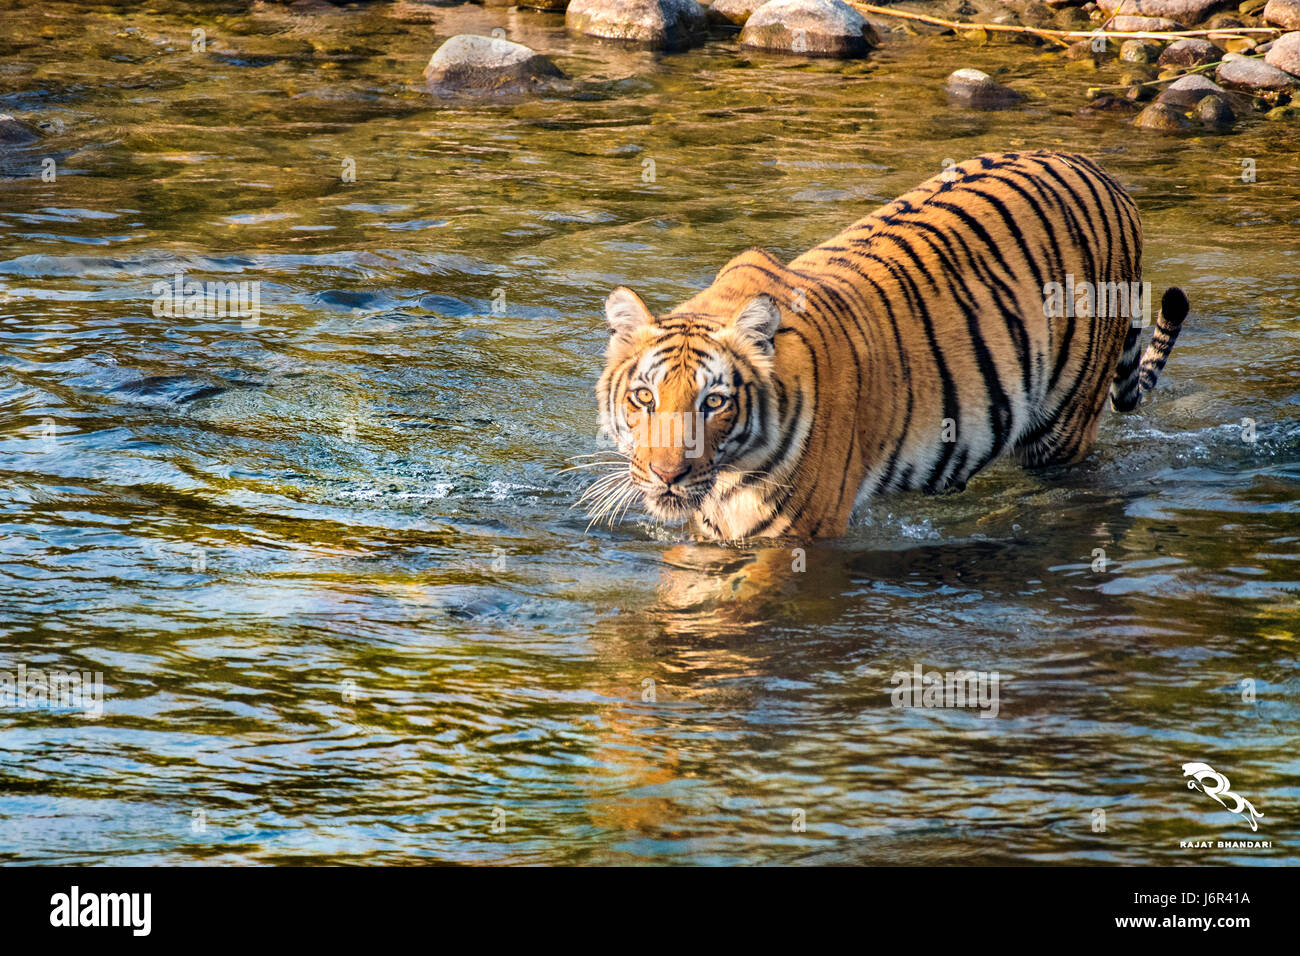 Tiger fiume crossing Foto Stock